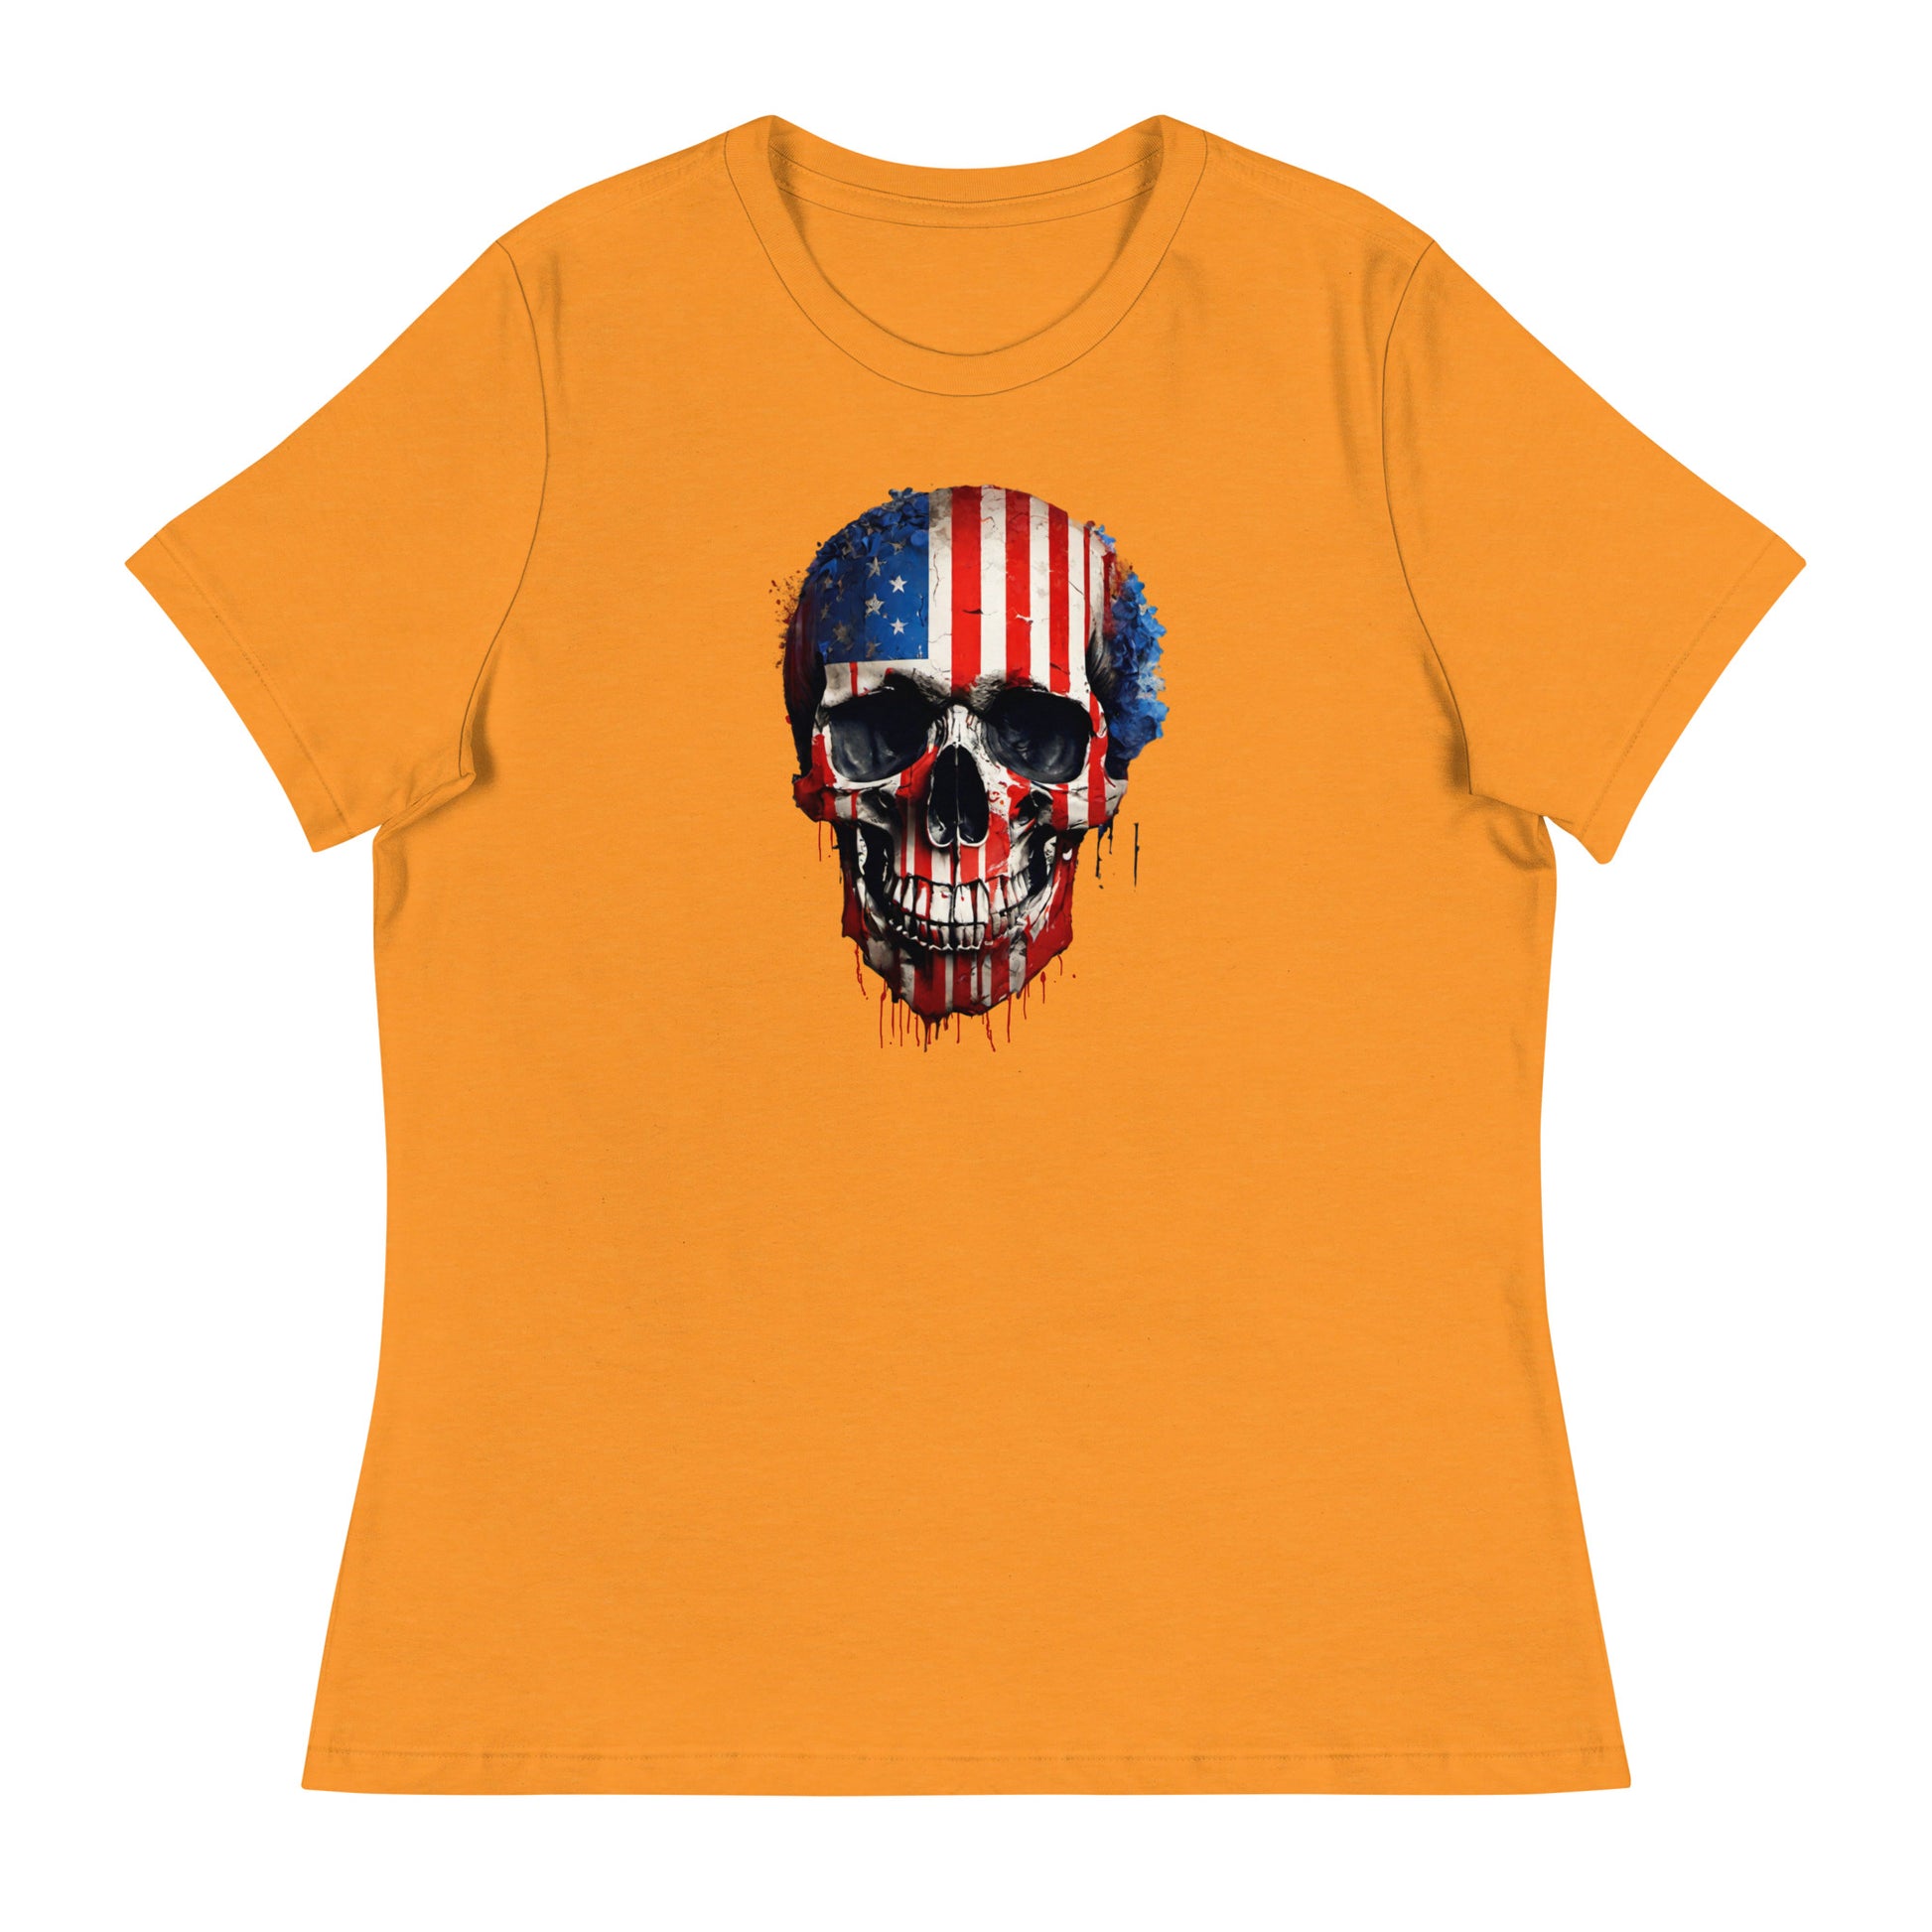 Red, White, & Blue Skull Women's T-Shirt Heather Marmalade